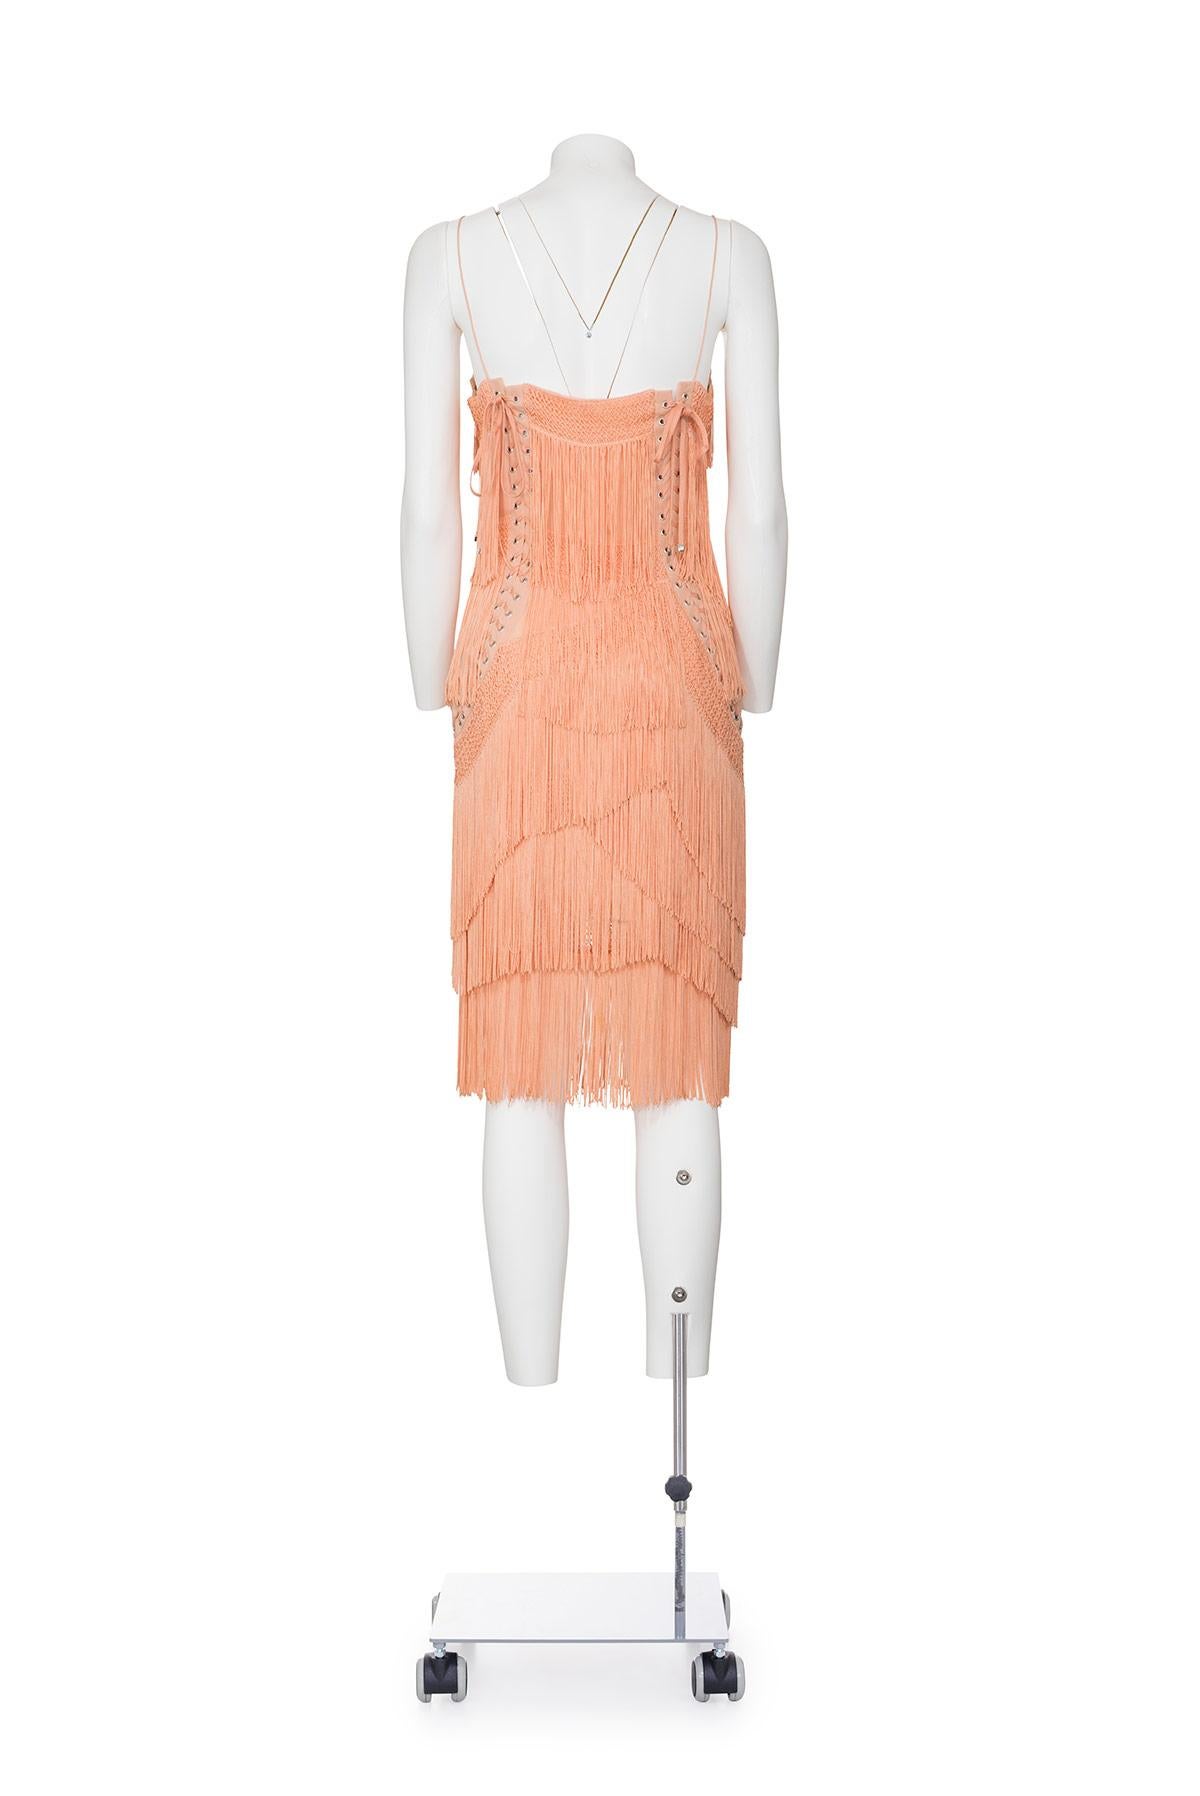 DOLCE & GABBANA FW 03 Iconic Fringe Slip Dress In Good Condition For Sale In Milano, MILANO